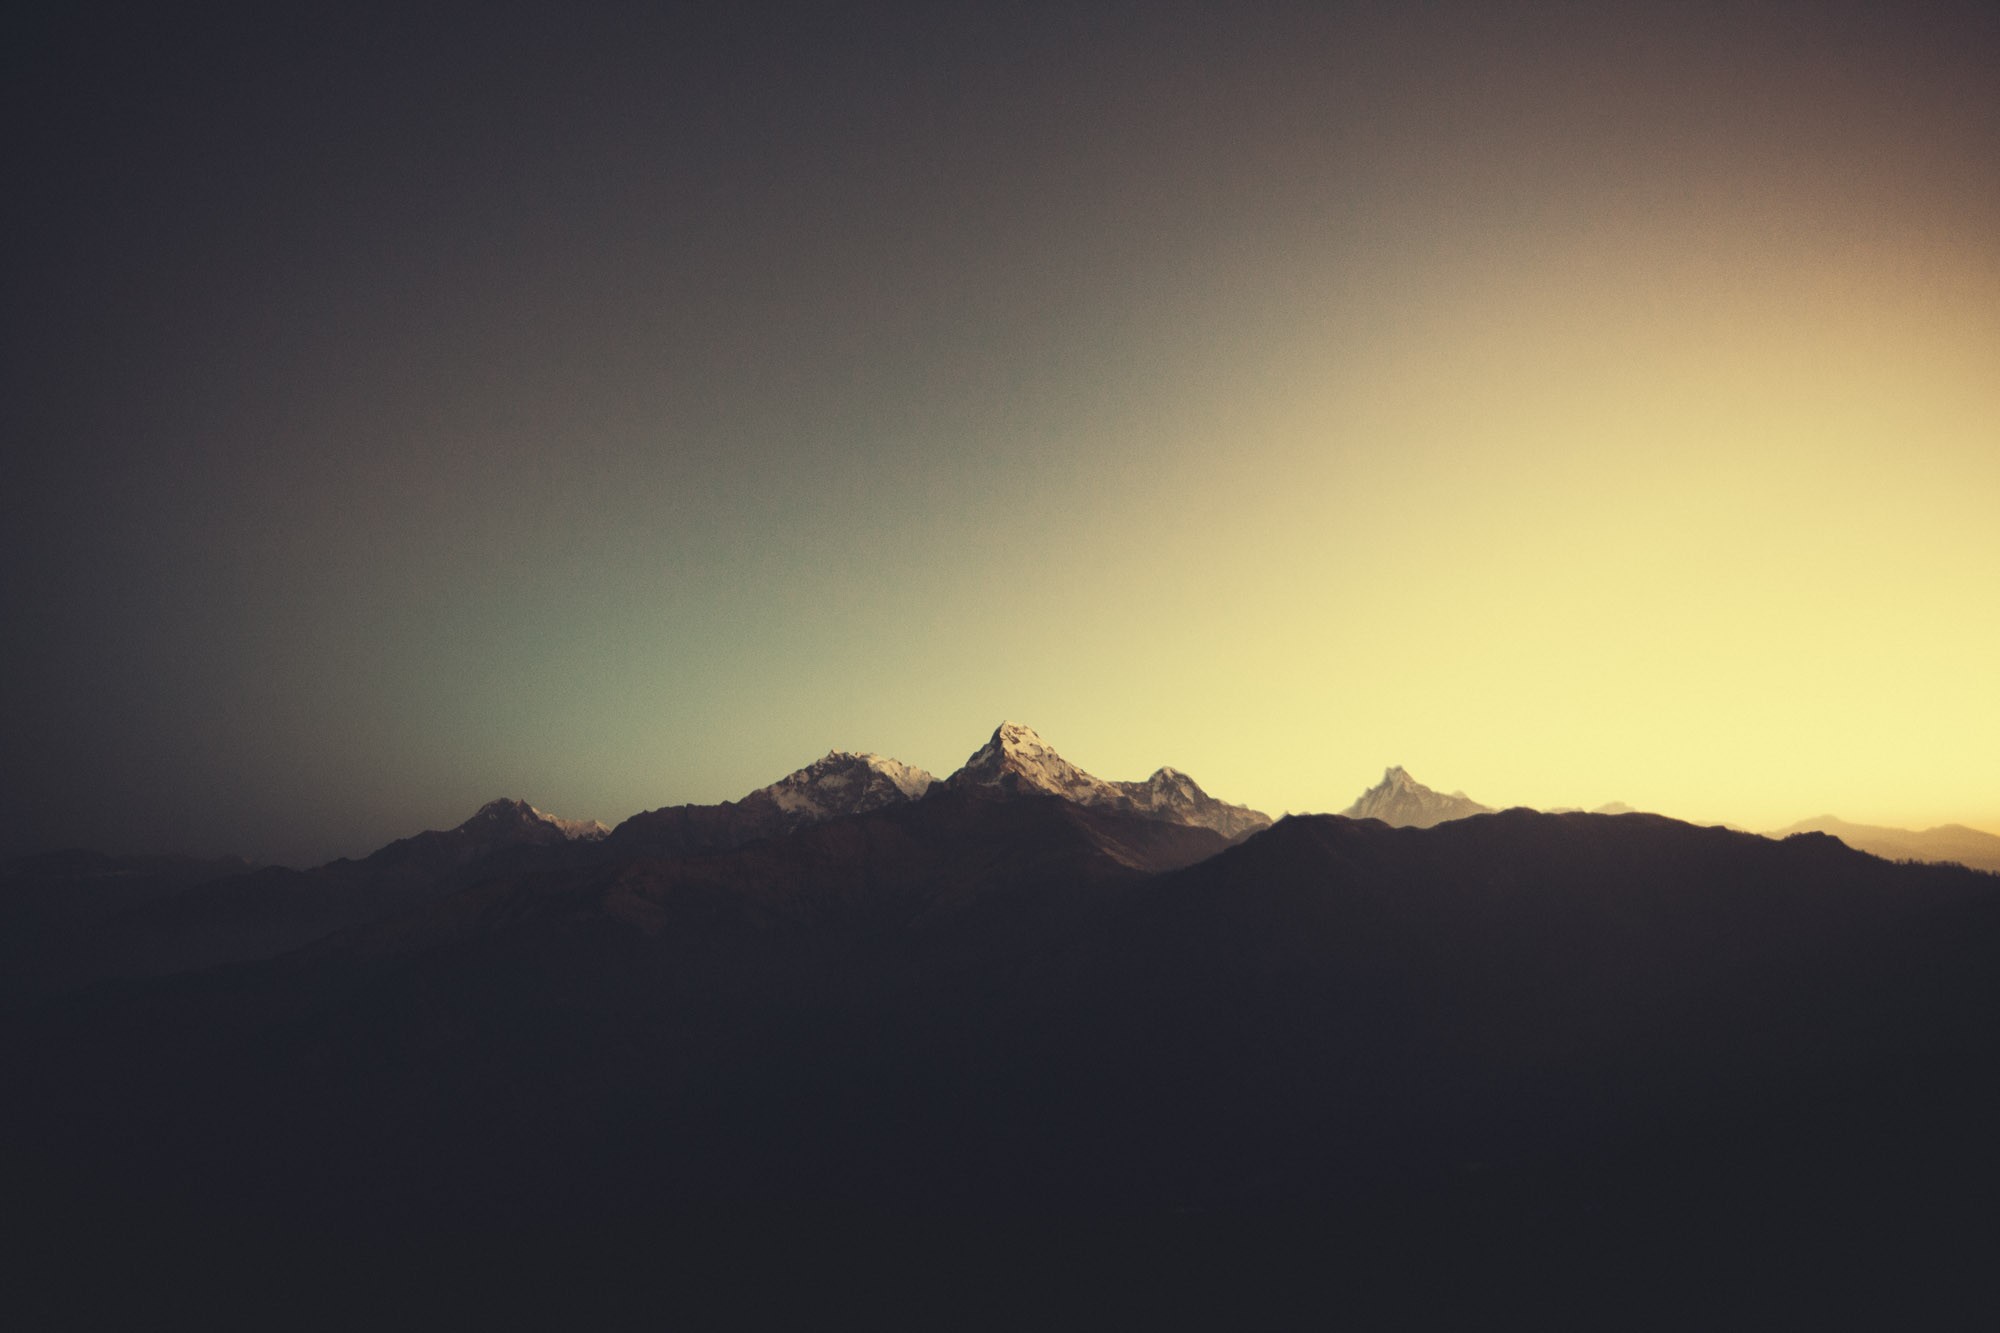 General 2000x1333 landscape mountains sunlight blurred Nepal Himalayas nature Annapurna sky Composite Montana beige